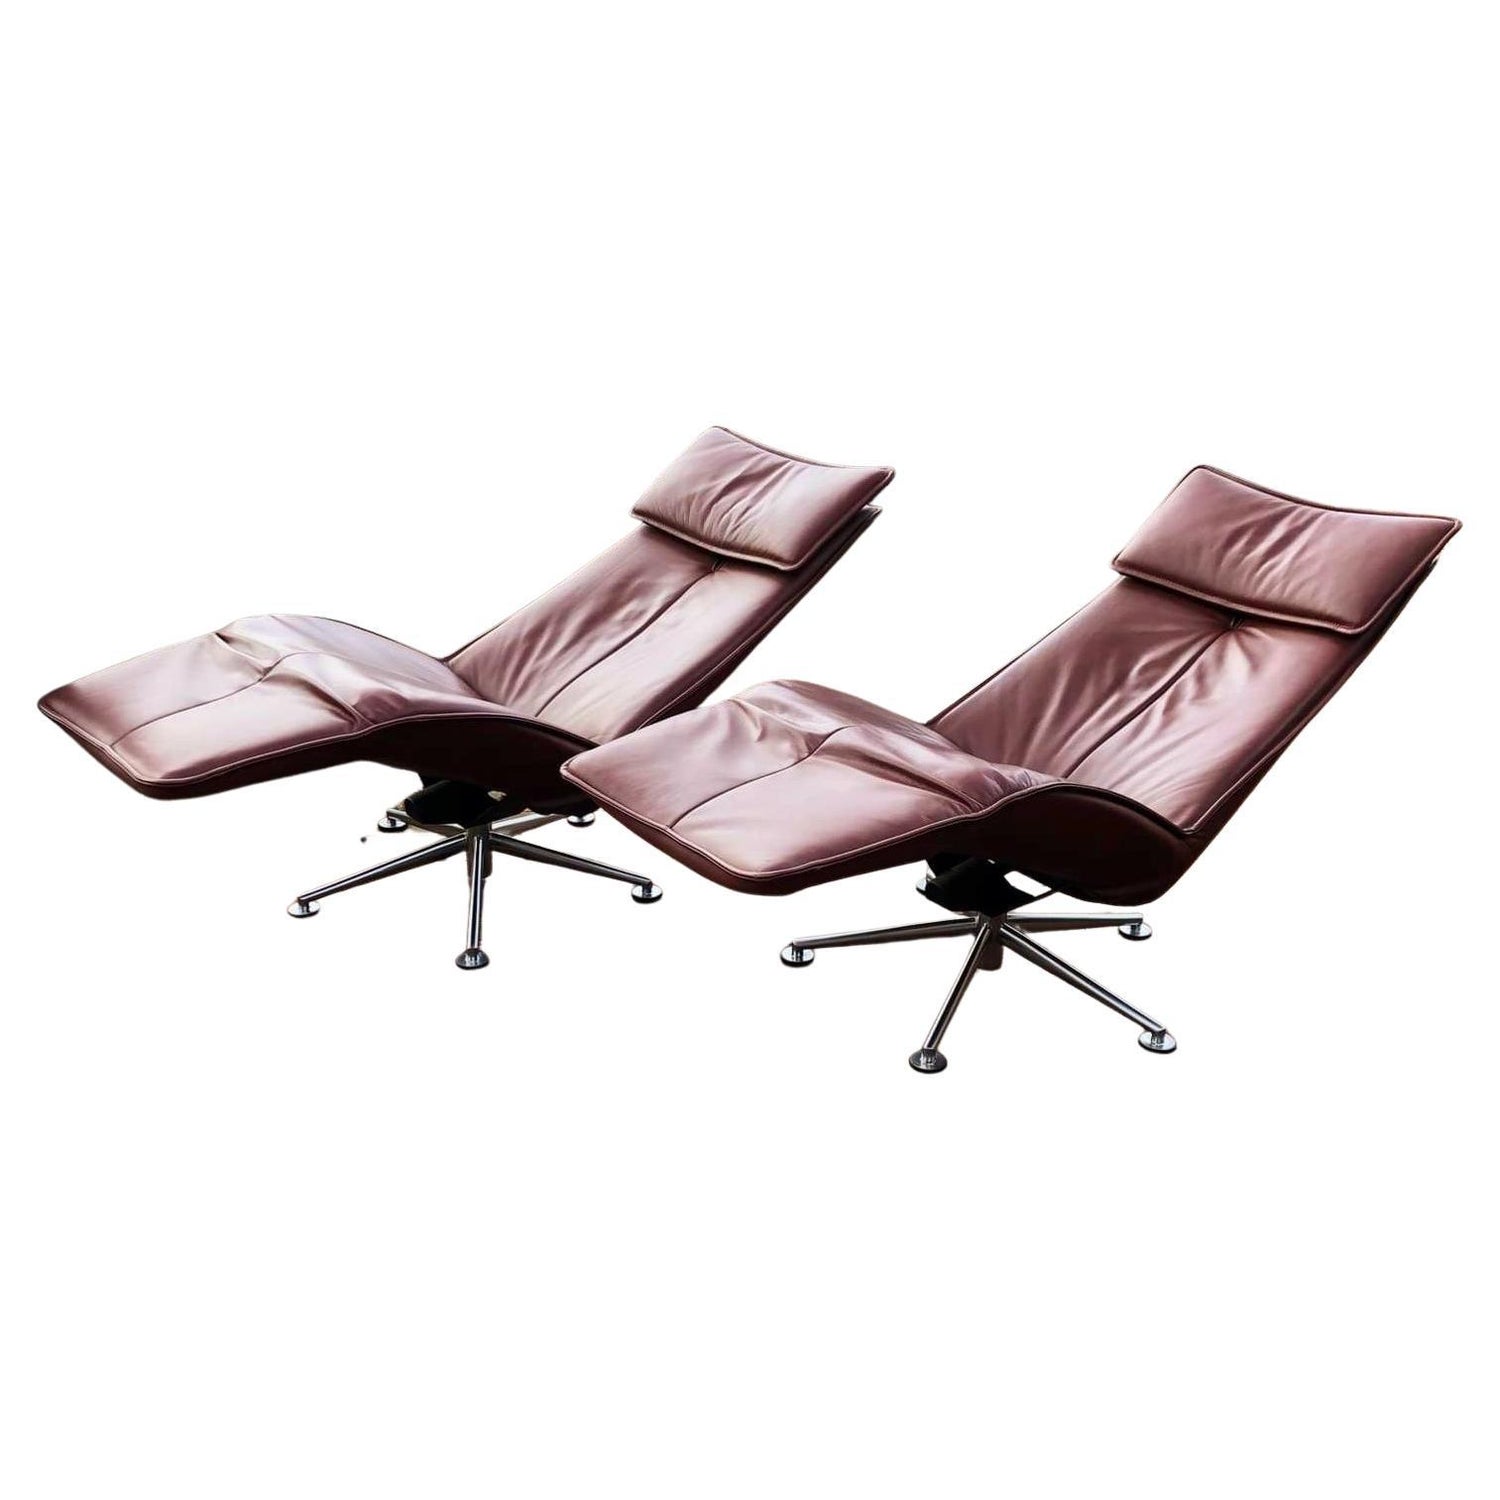 https://a.1stdibscdn.com/2-armchairs-modi-contura-2000-zero-gravity-by-hjellegjerde-for-sale/f_72592/f_327828721676468836831/f_32782872_1676468837207_bg_processed.jpg?width=1500